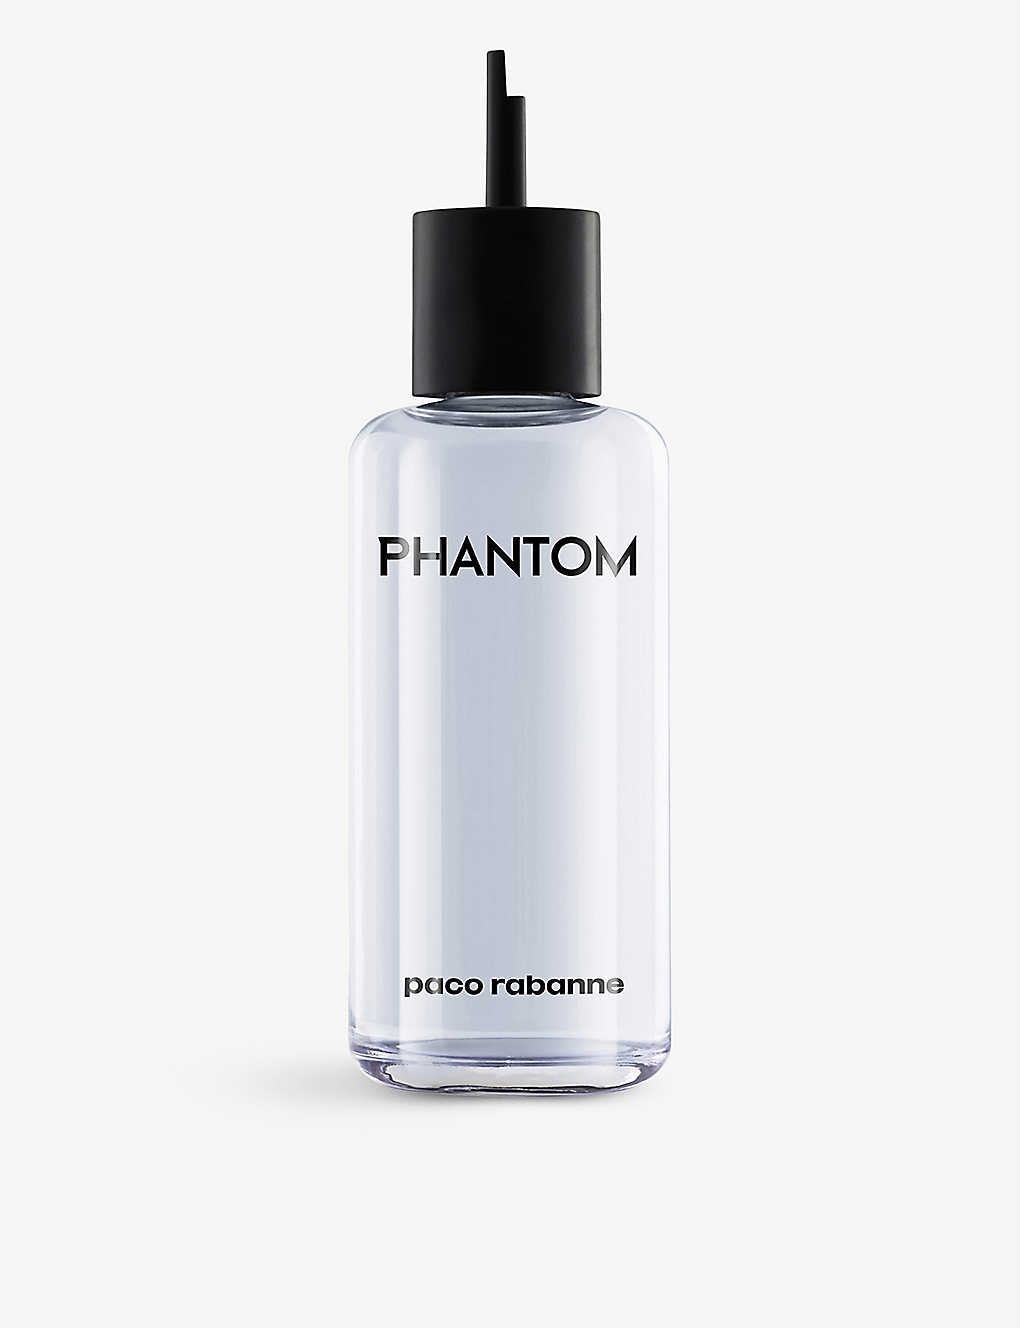 Paco Rabanne Phantom Eau De Toilette Refill Bottle 200ml